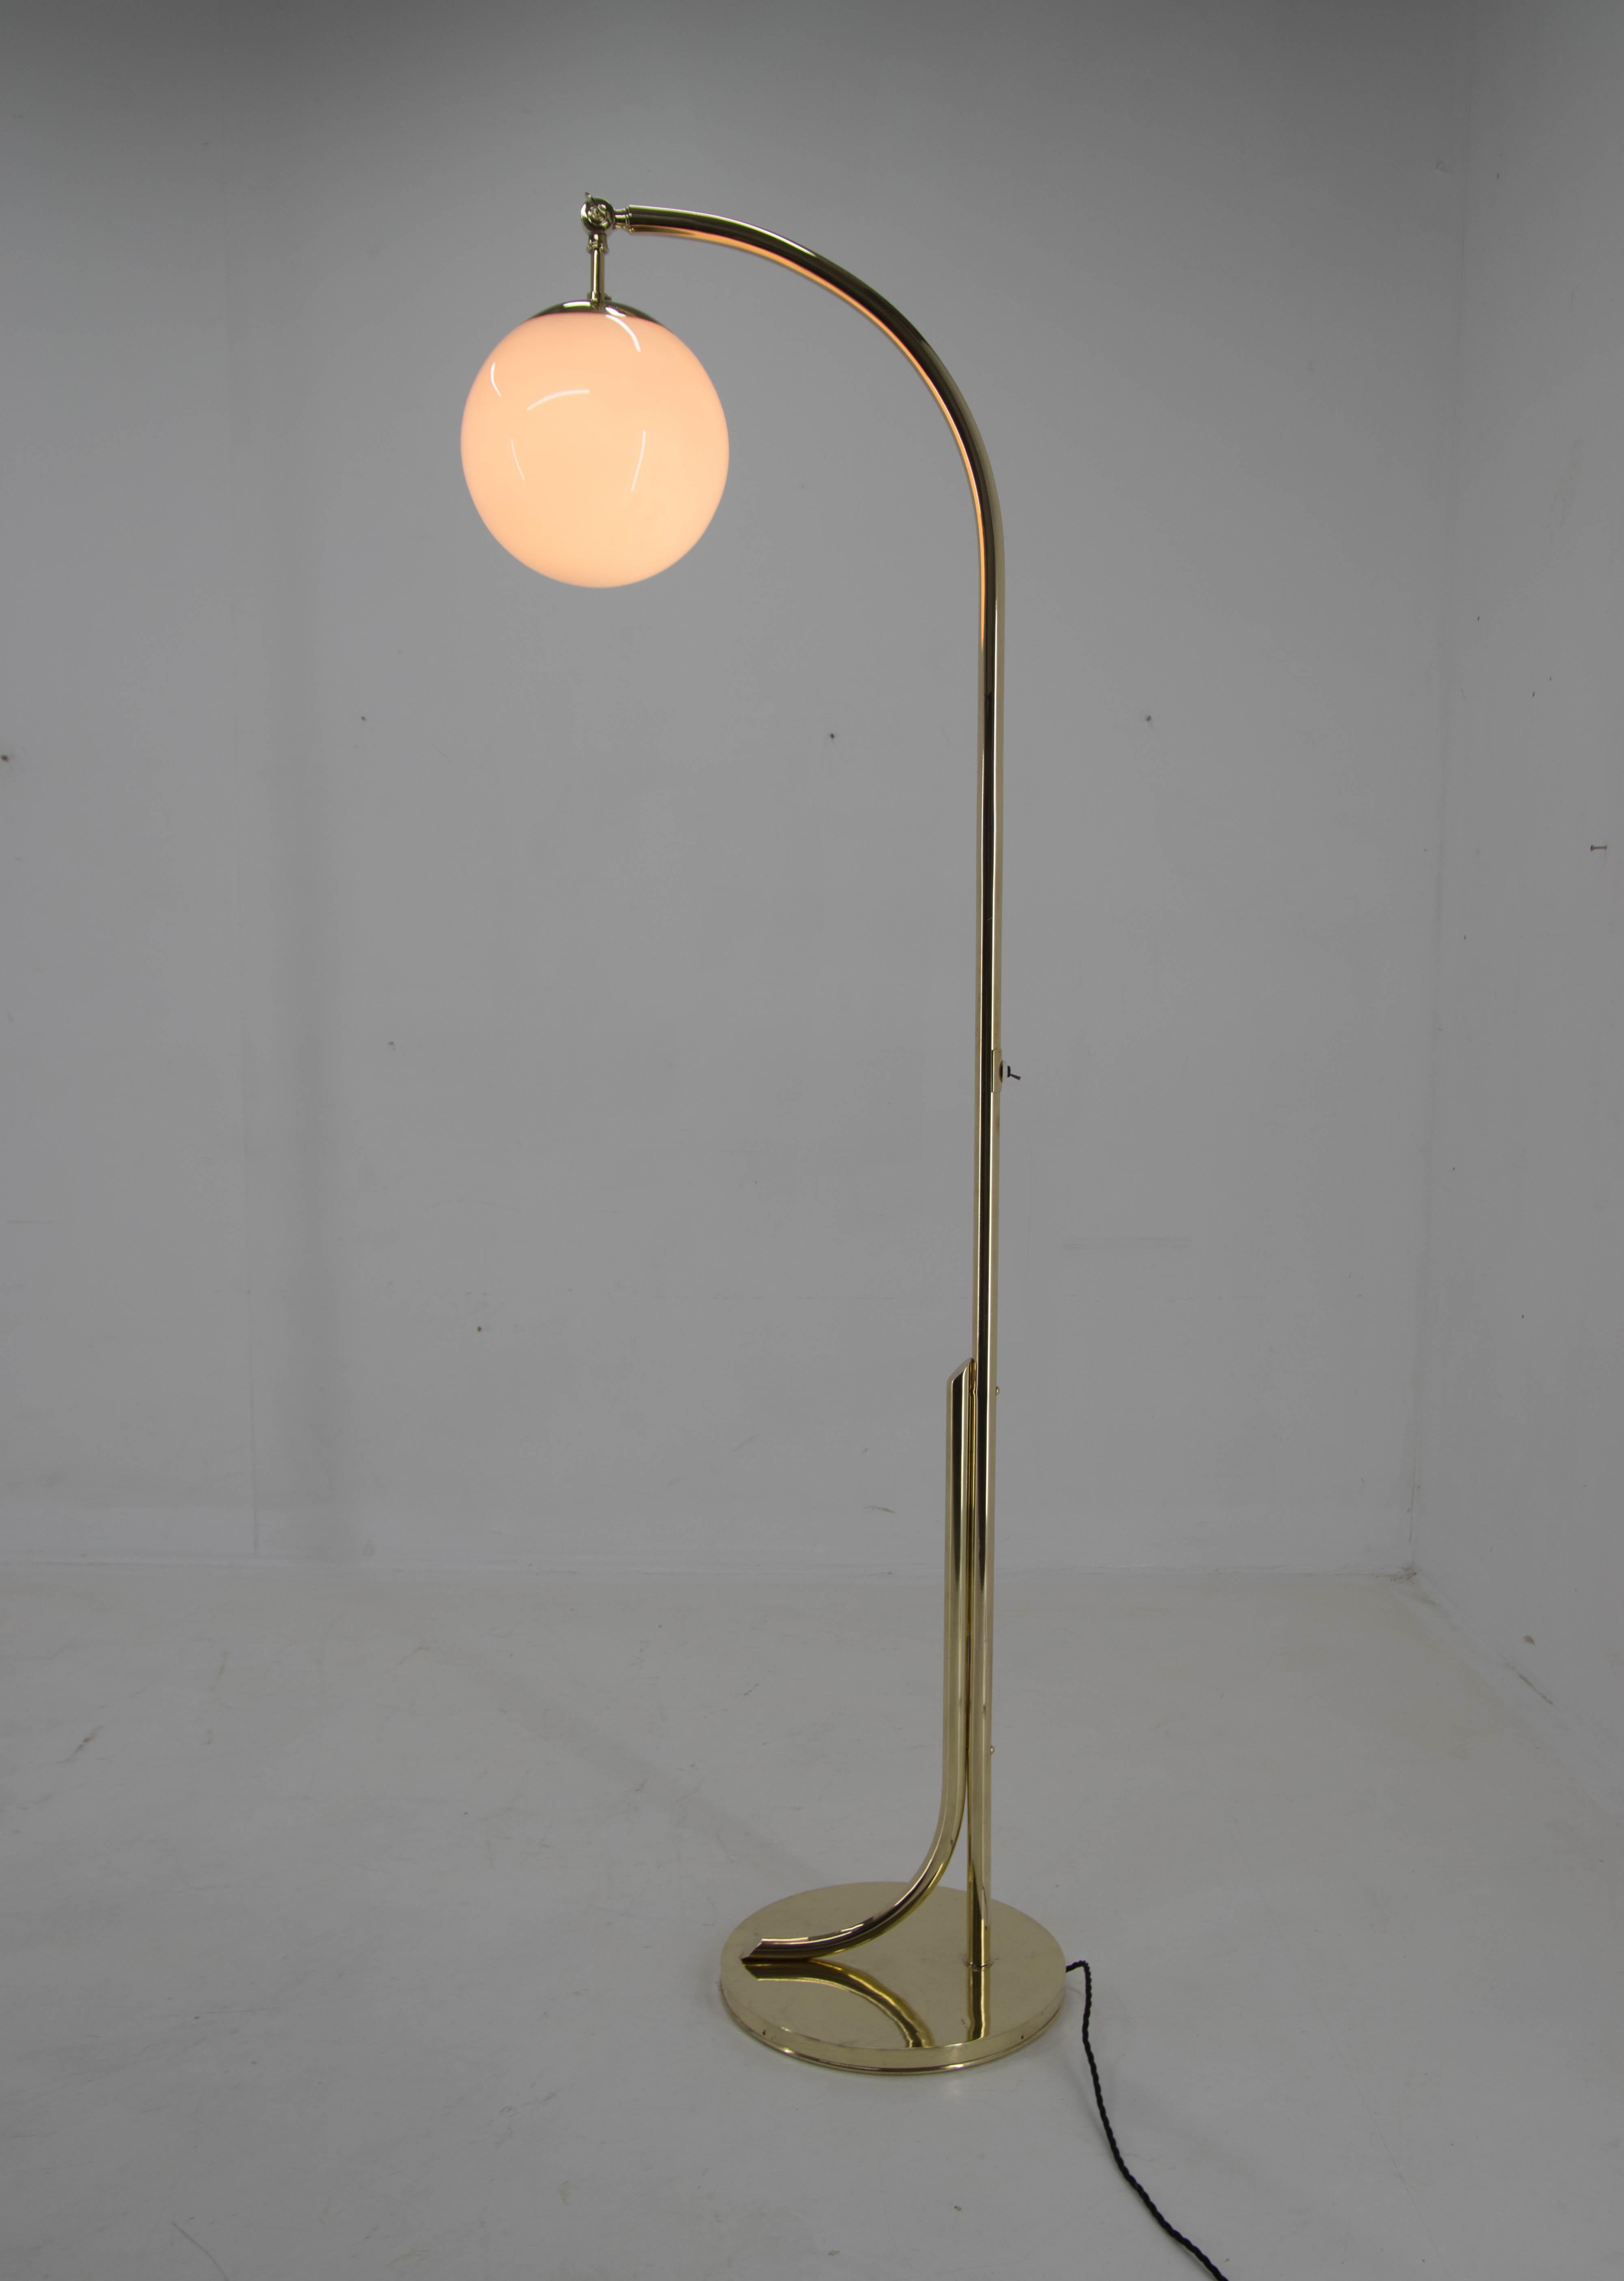 Czech Rare Ar Deco / Functionalist Brass Floor Lamp, 1930s, Restored For Sale